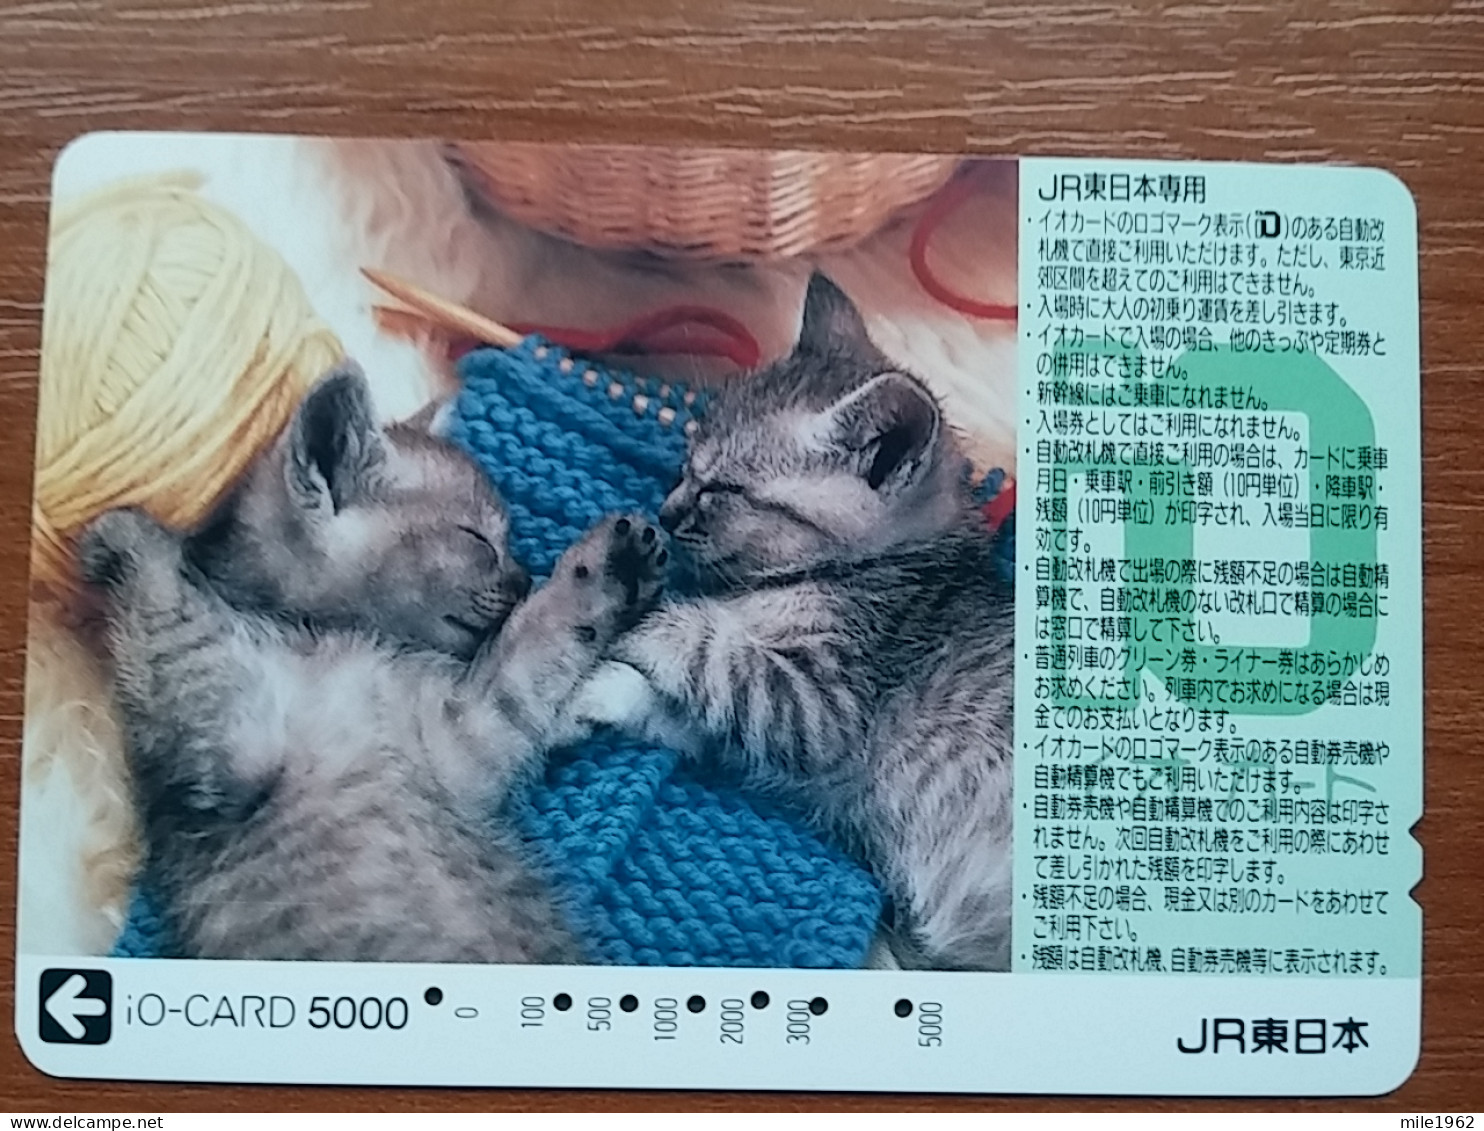 T-402 - JAPAN, Japon, Nipon, Carte Prepayee, Prepaid Card, CAT, CHAT,  - Gatos